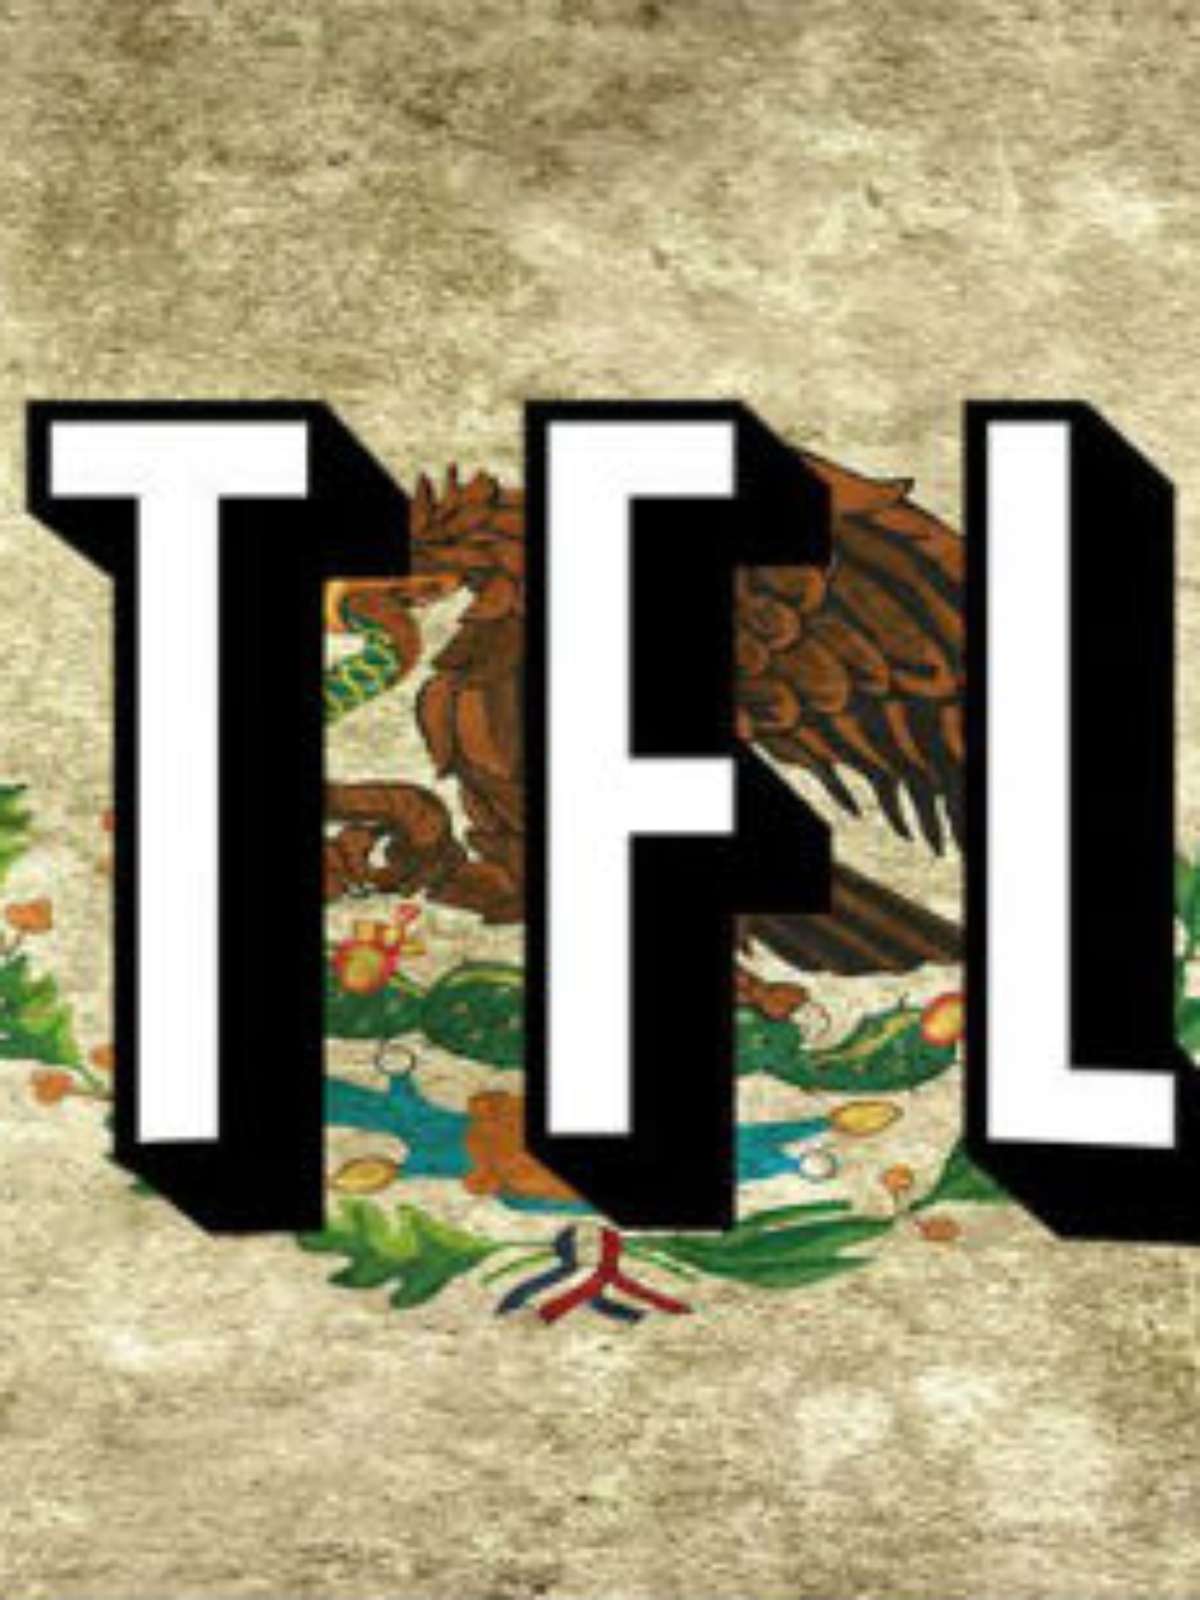 Netflix anuncia Seis Manos, anime ambientado no México feito por estúdio de  Castlevania - NerdBunker